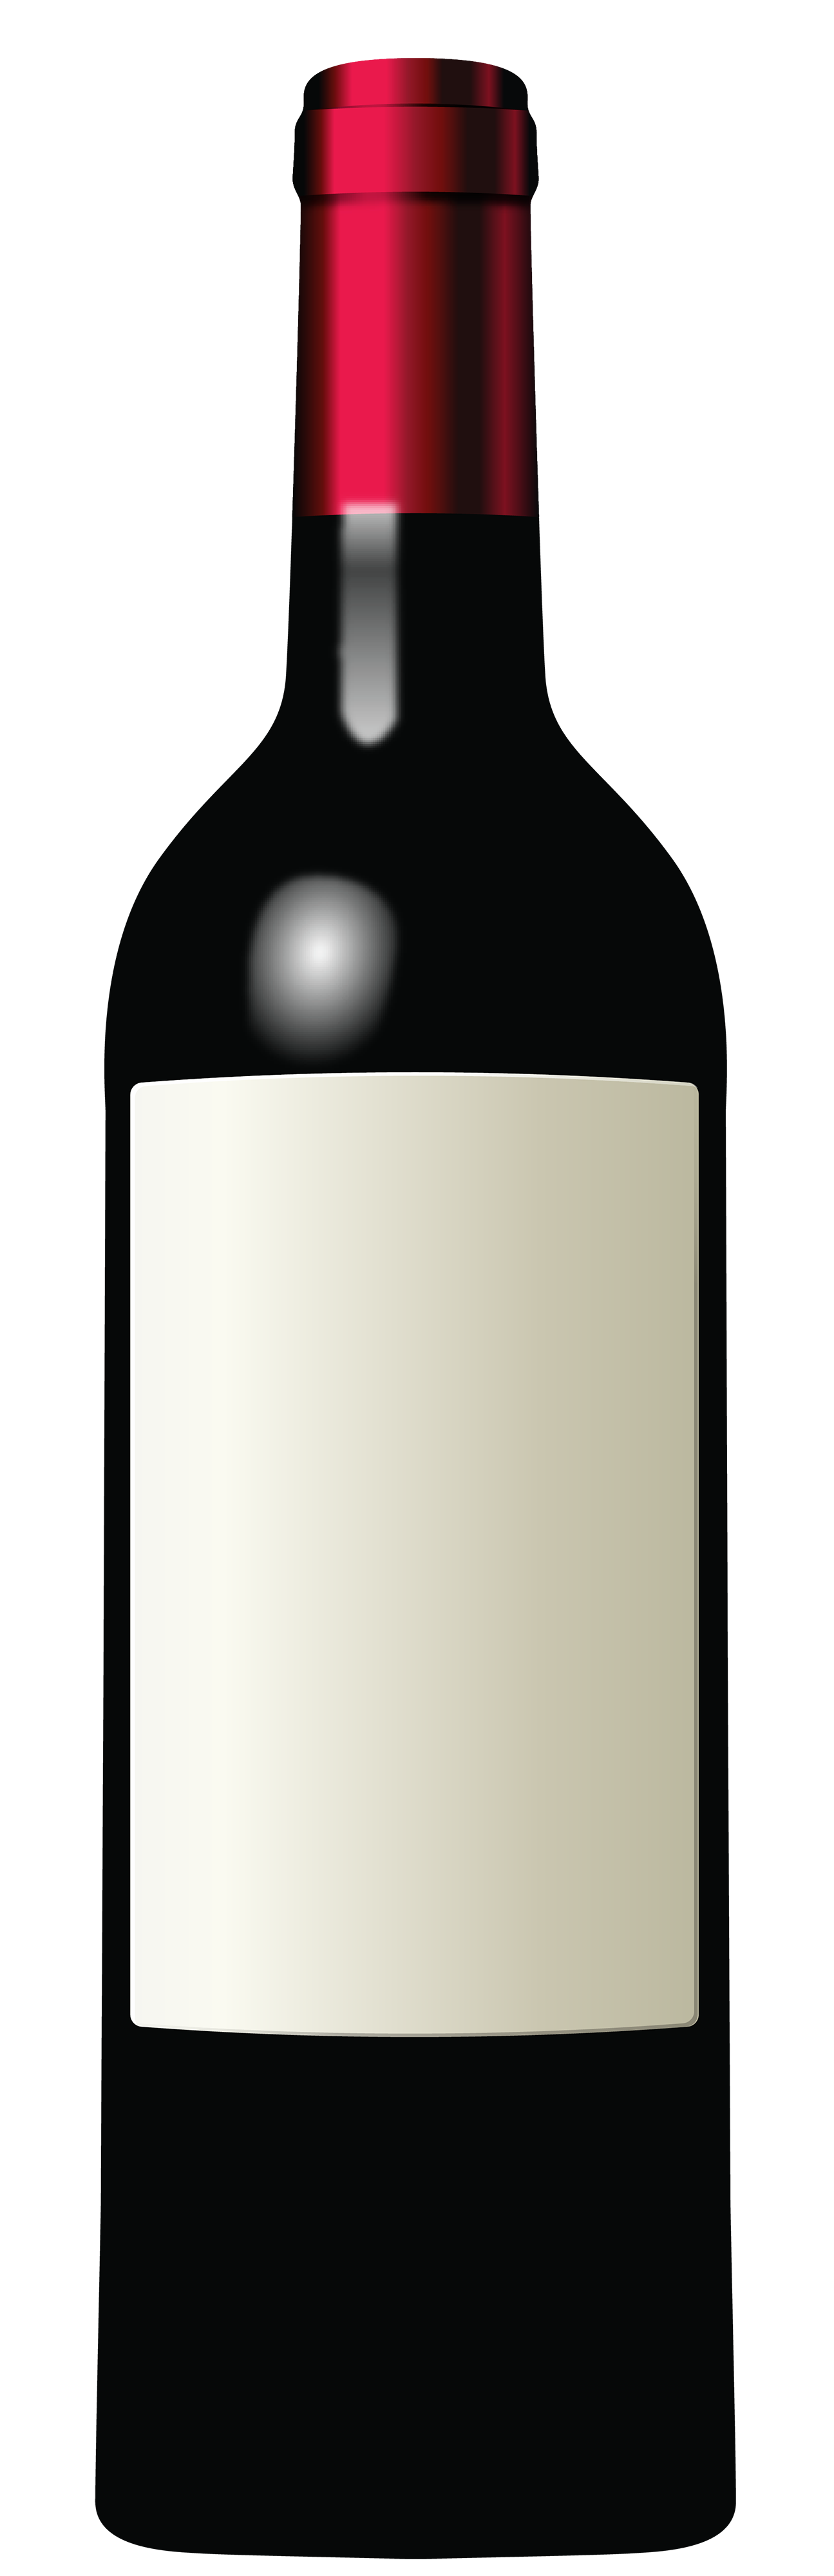 Wallpaper wine bottle silhouette clipart image #19741